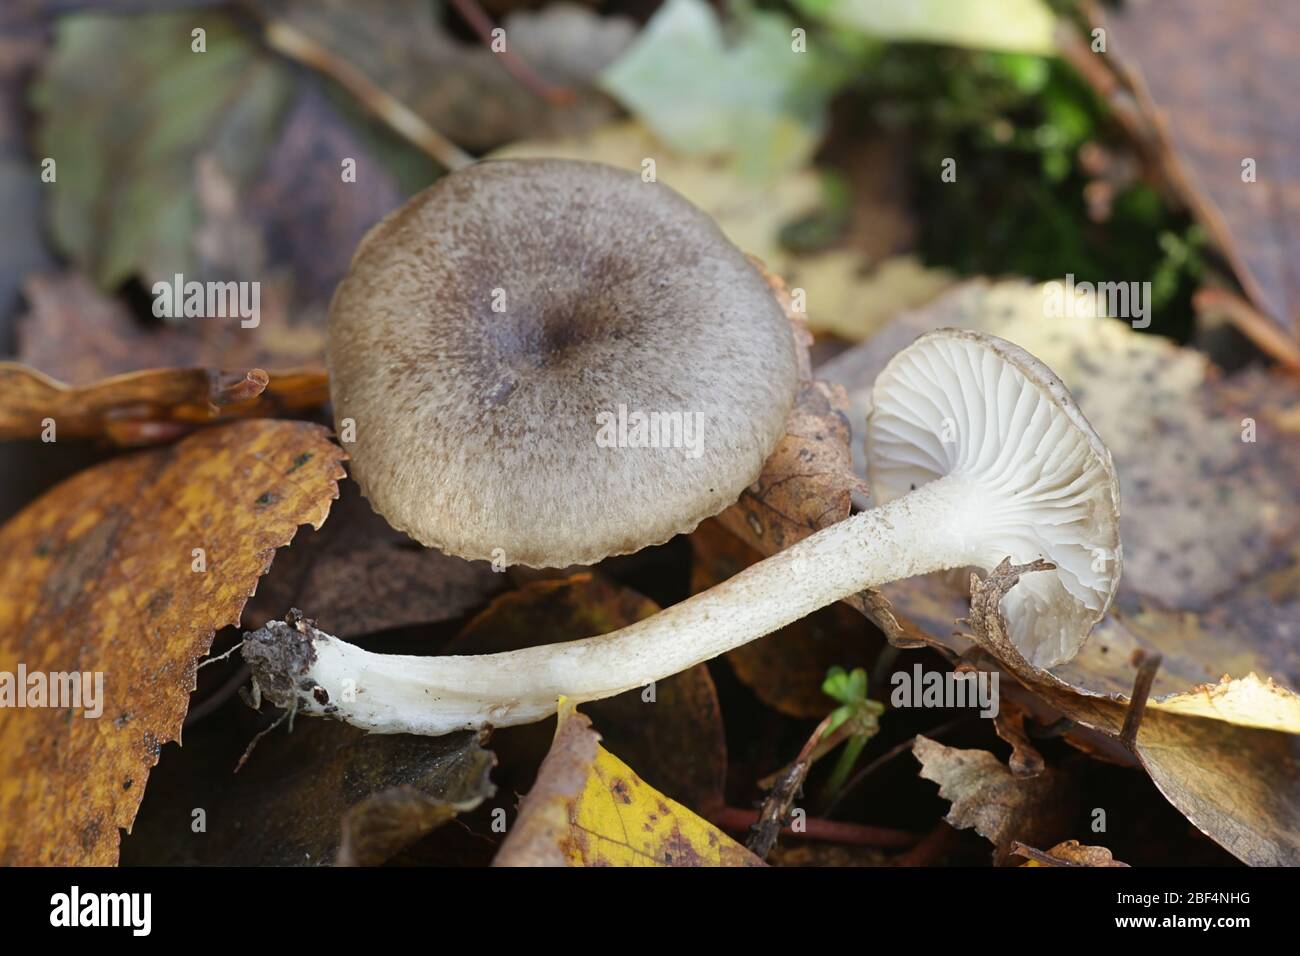 Hygrophorus pustulatus, grey slimy woodwax mushrooms from Finland Stock Photo